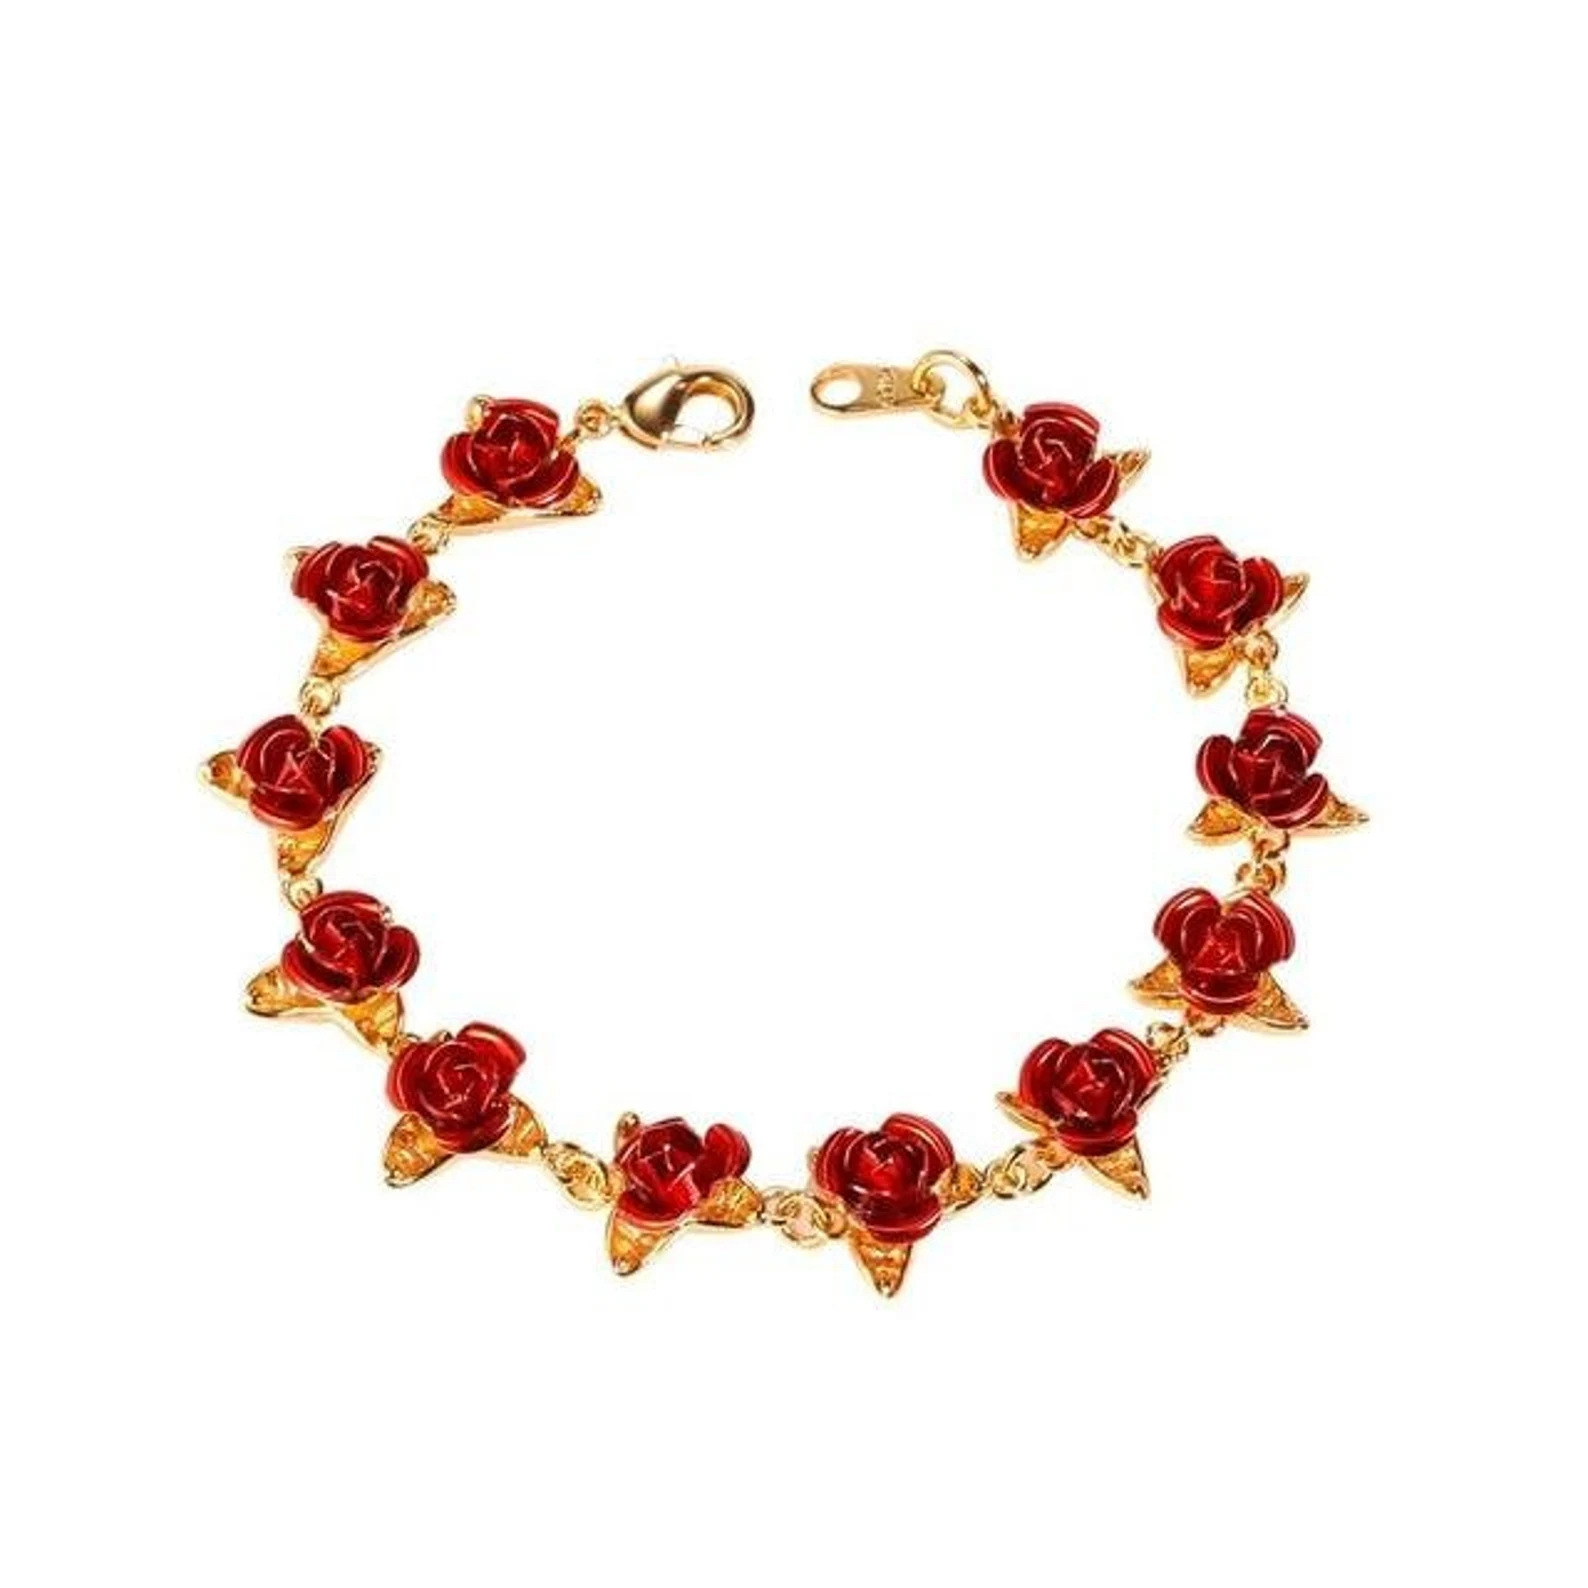 18.NESSACHY Red Rose Flowers Charm Bracelet €30.20, 